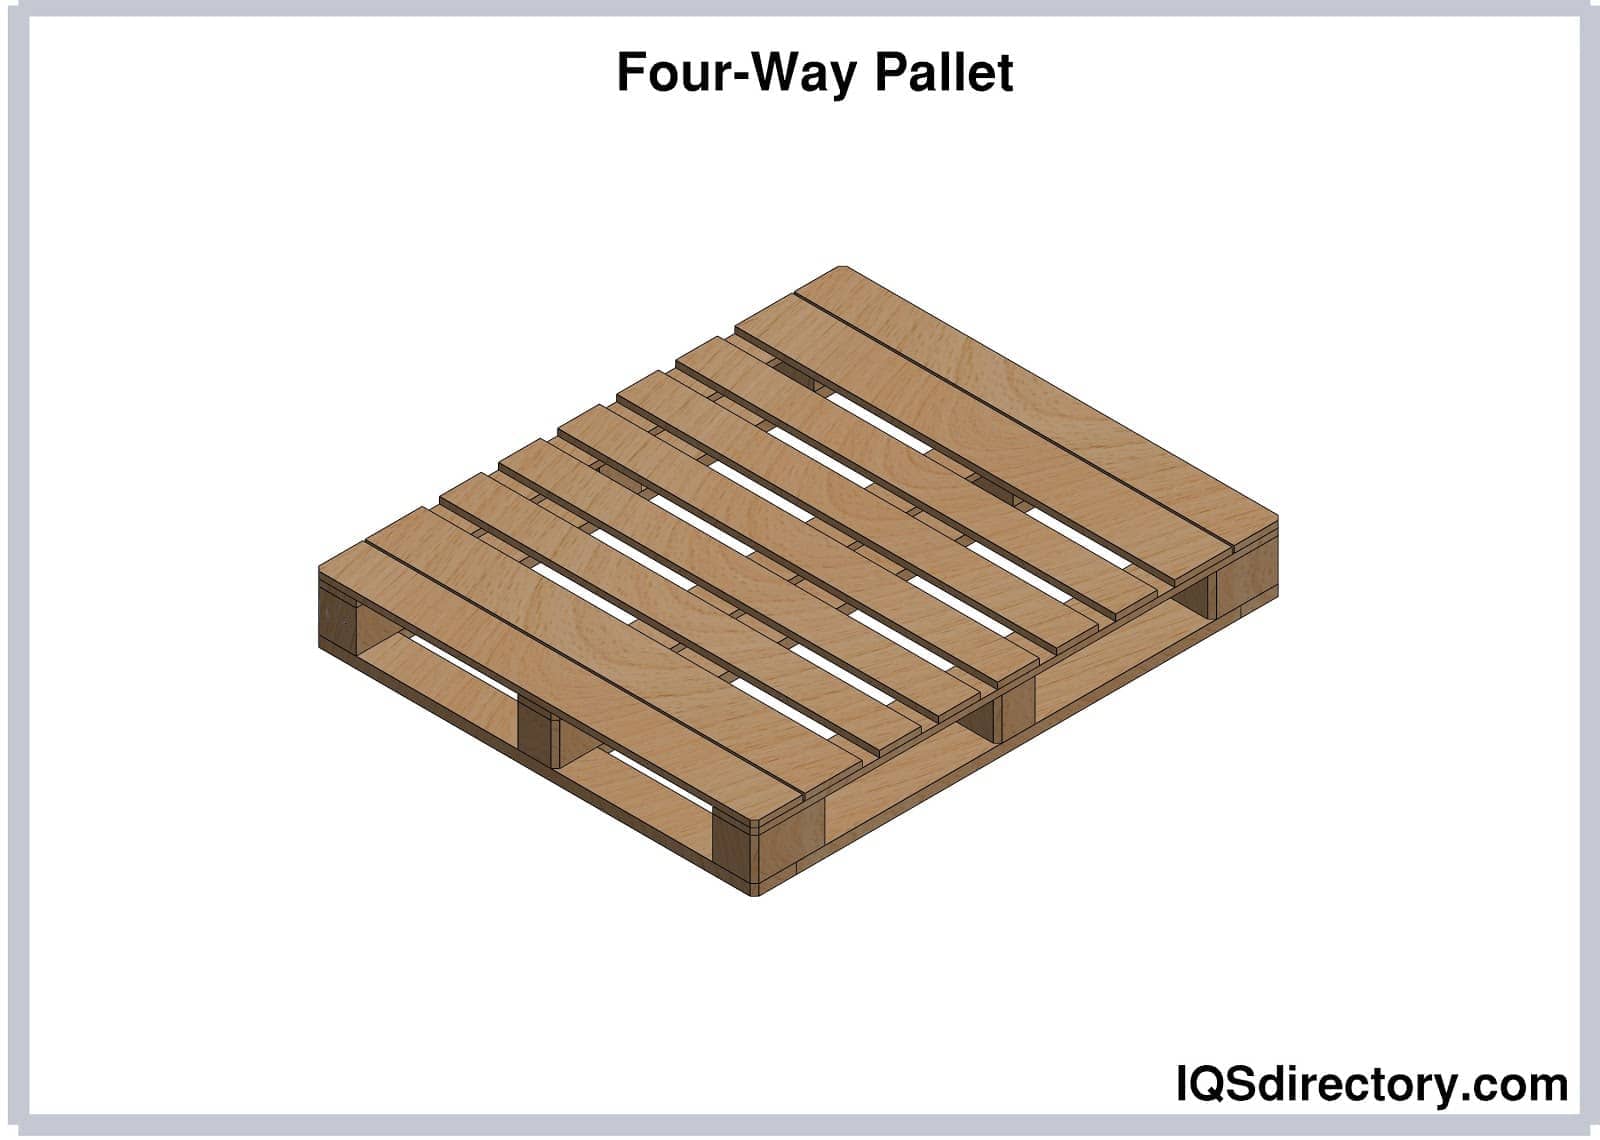 Four-Way Pallet